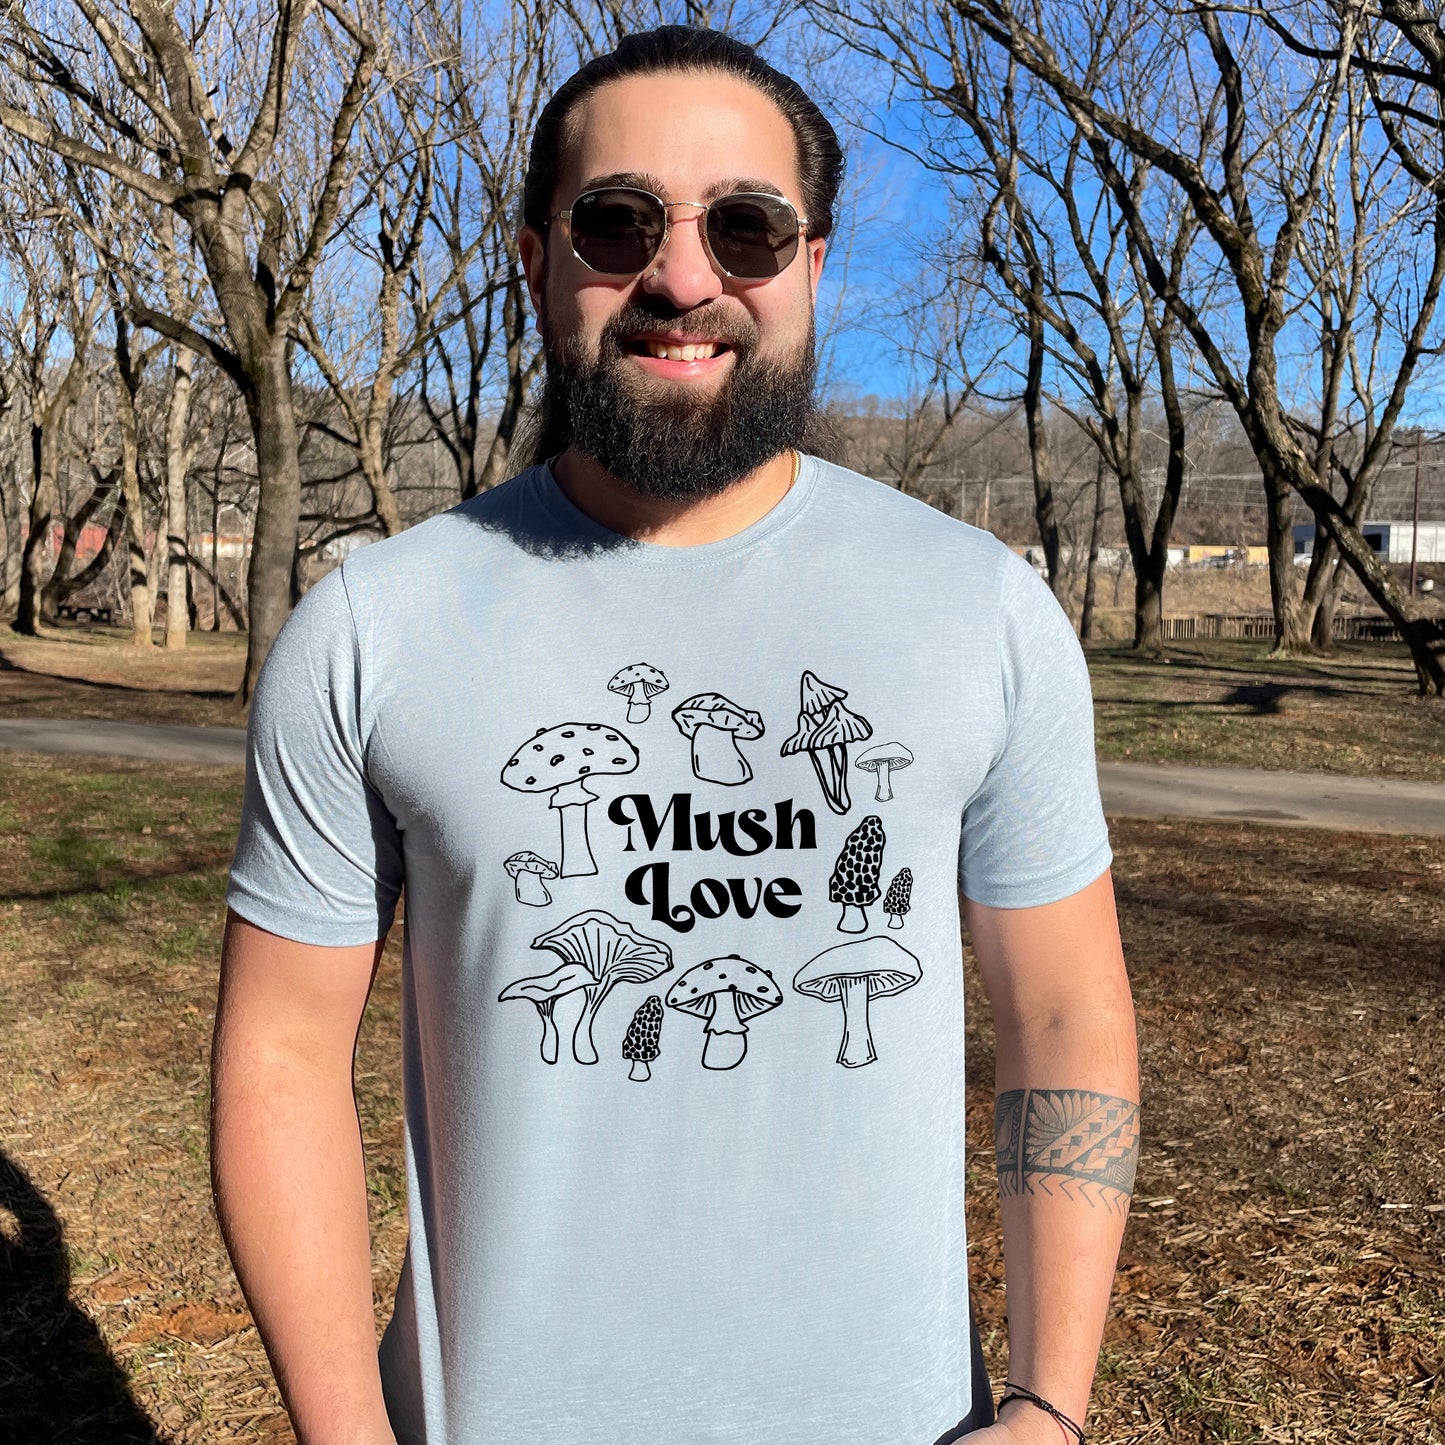 a man with a beard wearing a t - shirt that says mushroom love